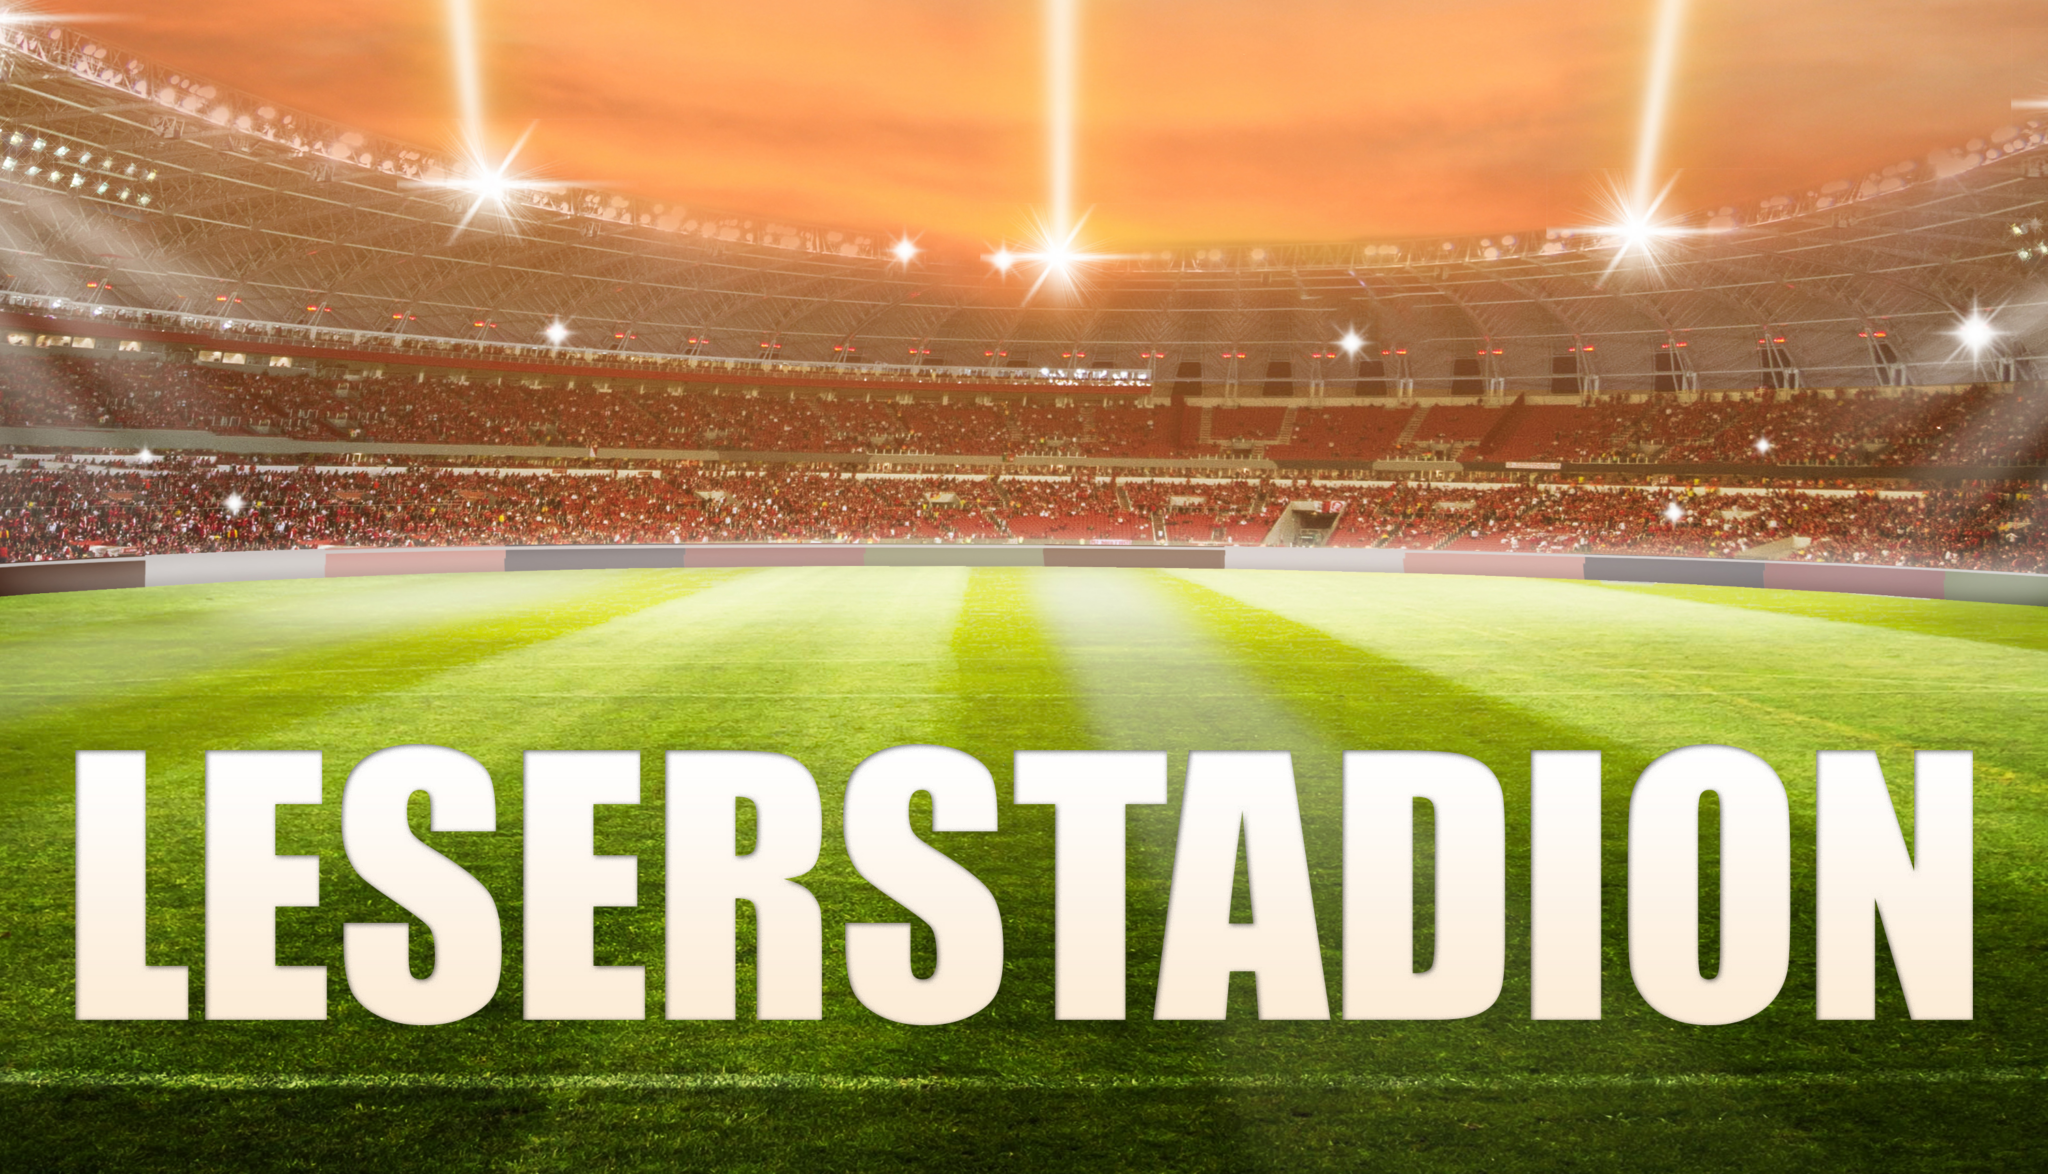 Widok na Weserstadion, przed nim napis „Leserstadion”